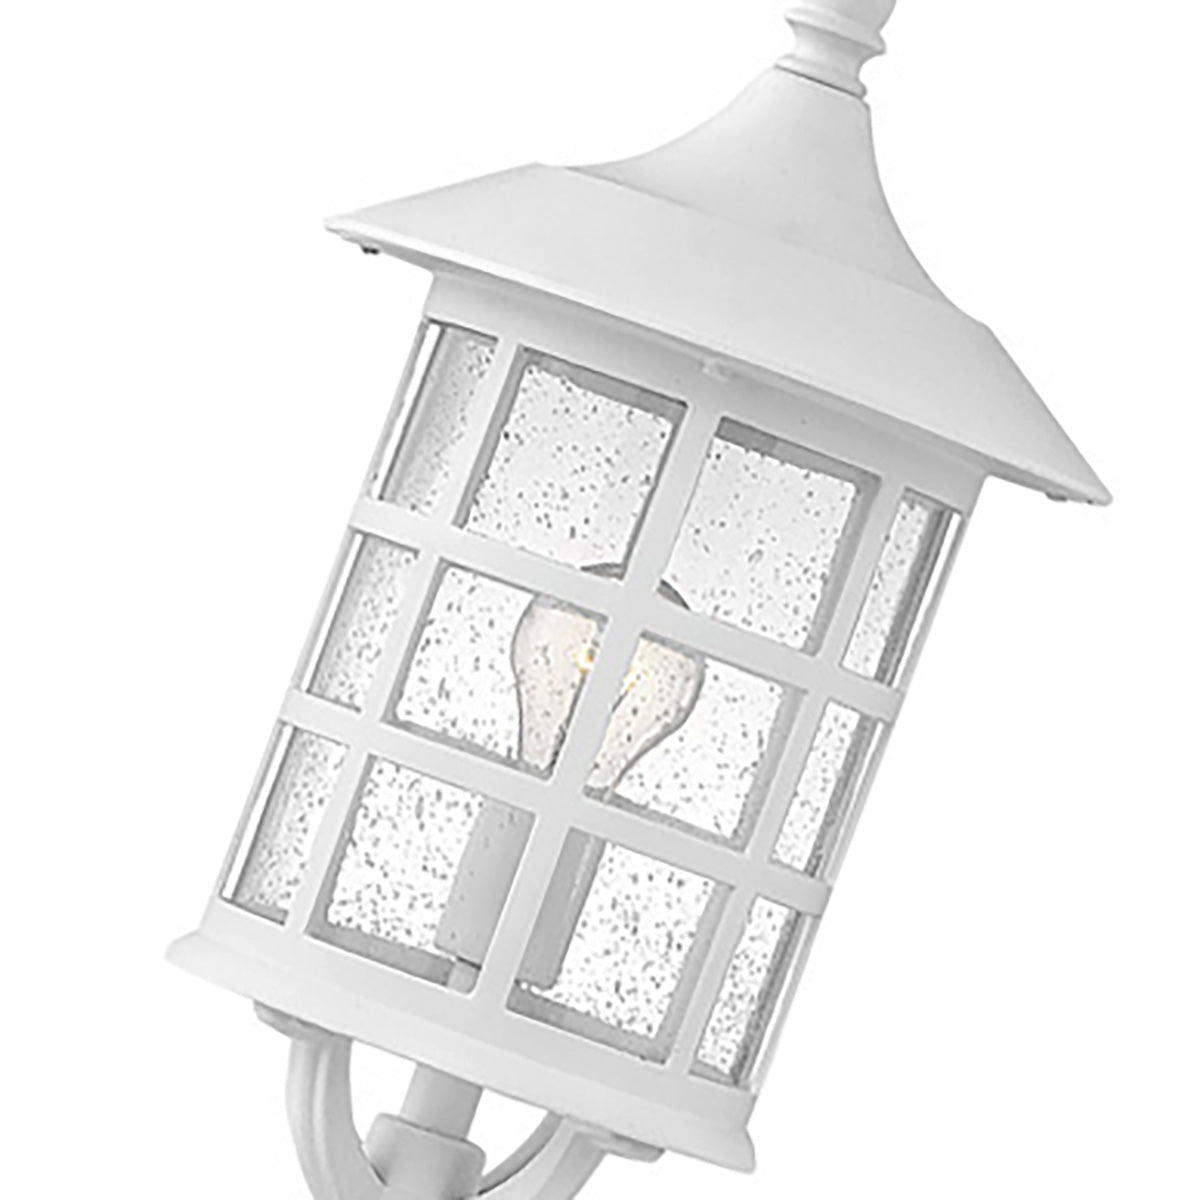 Freeport 1L medium pier mount lantern - 1861TW